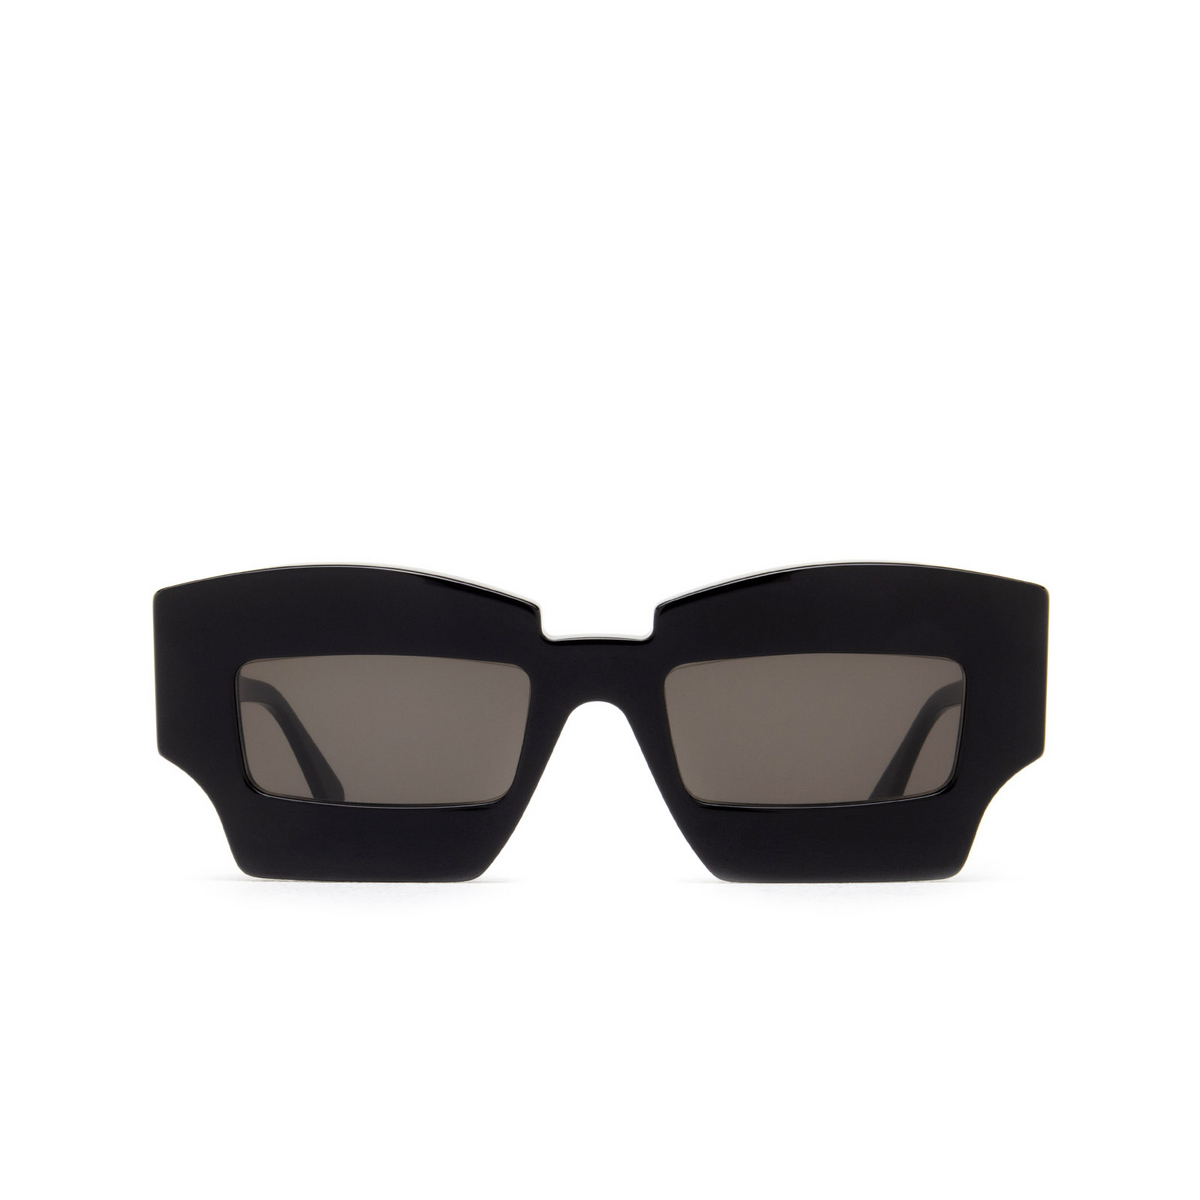 Kuboraum X6 Sunglasses BS Black Shine - front view